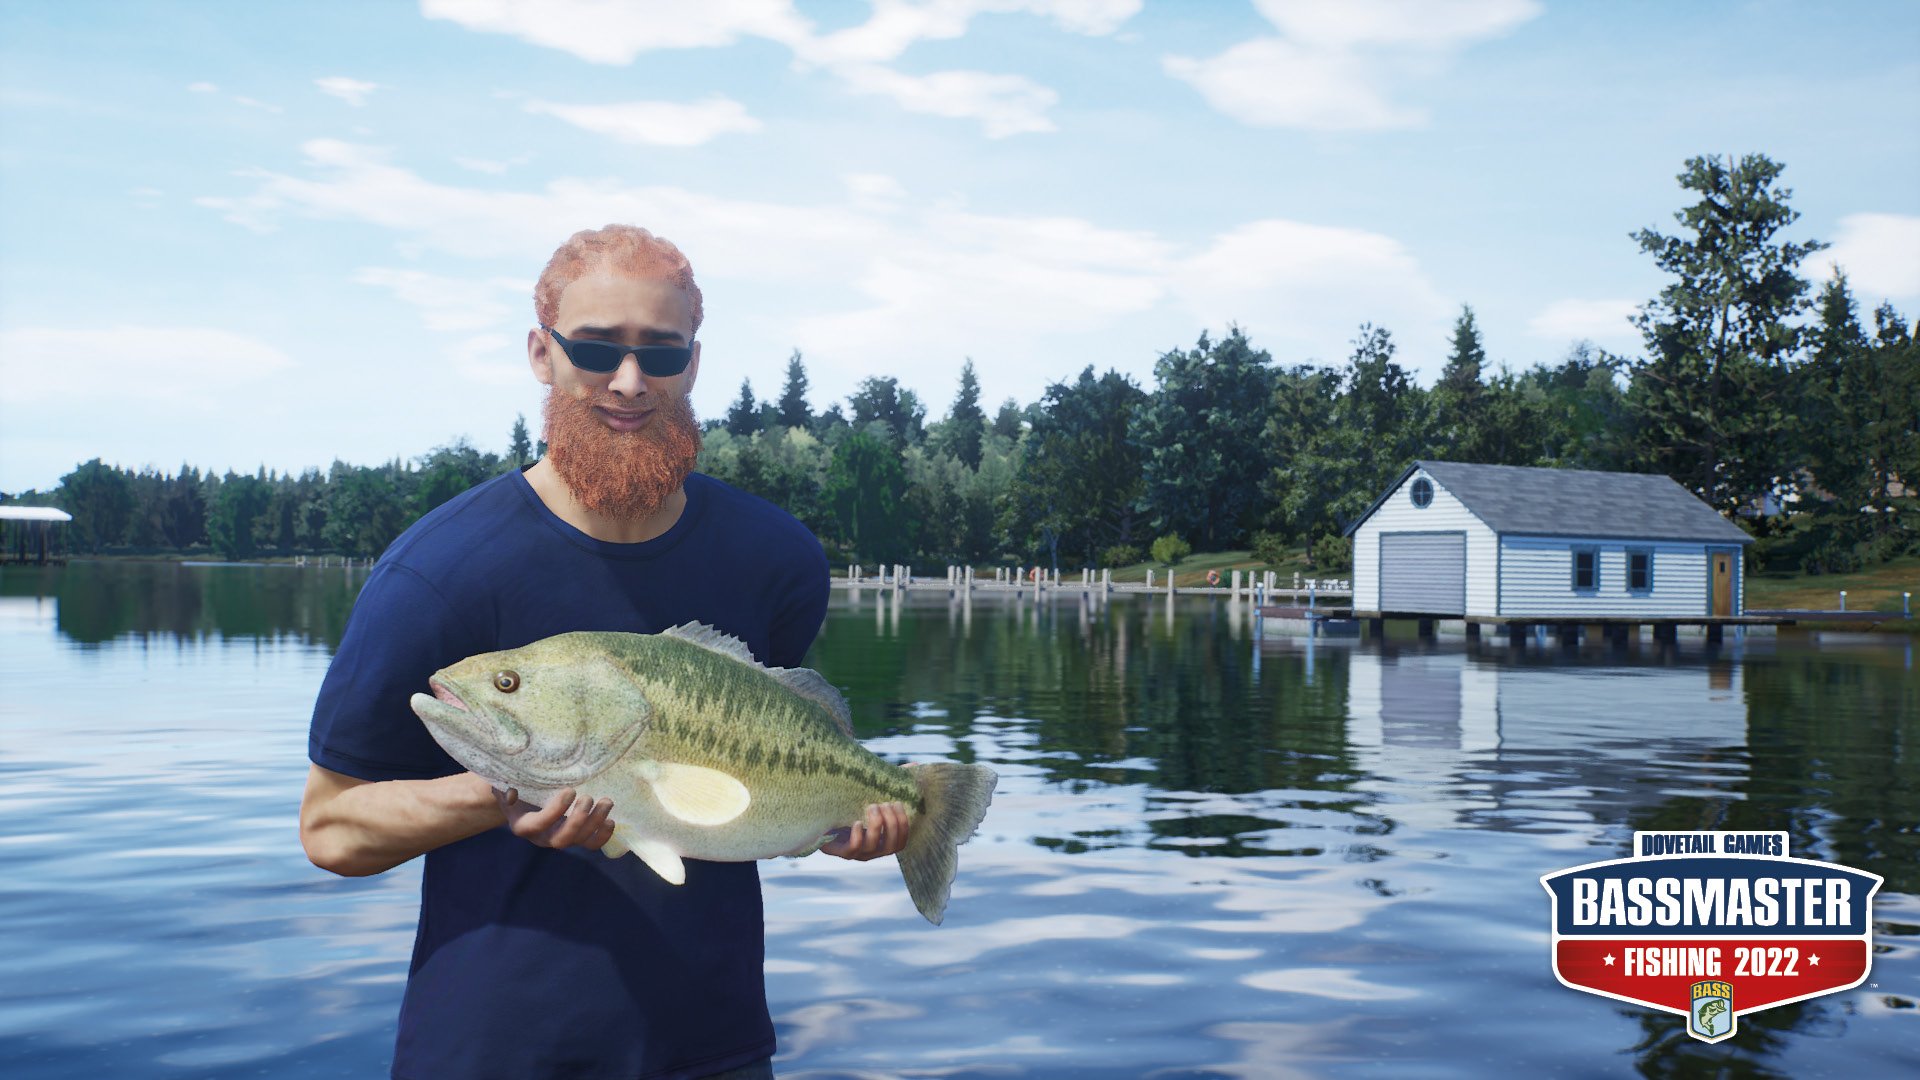 Bassmaster Fishing 2022 Launches Biggest Update Yet - Xbox Wire